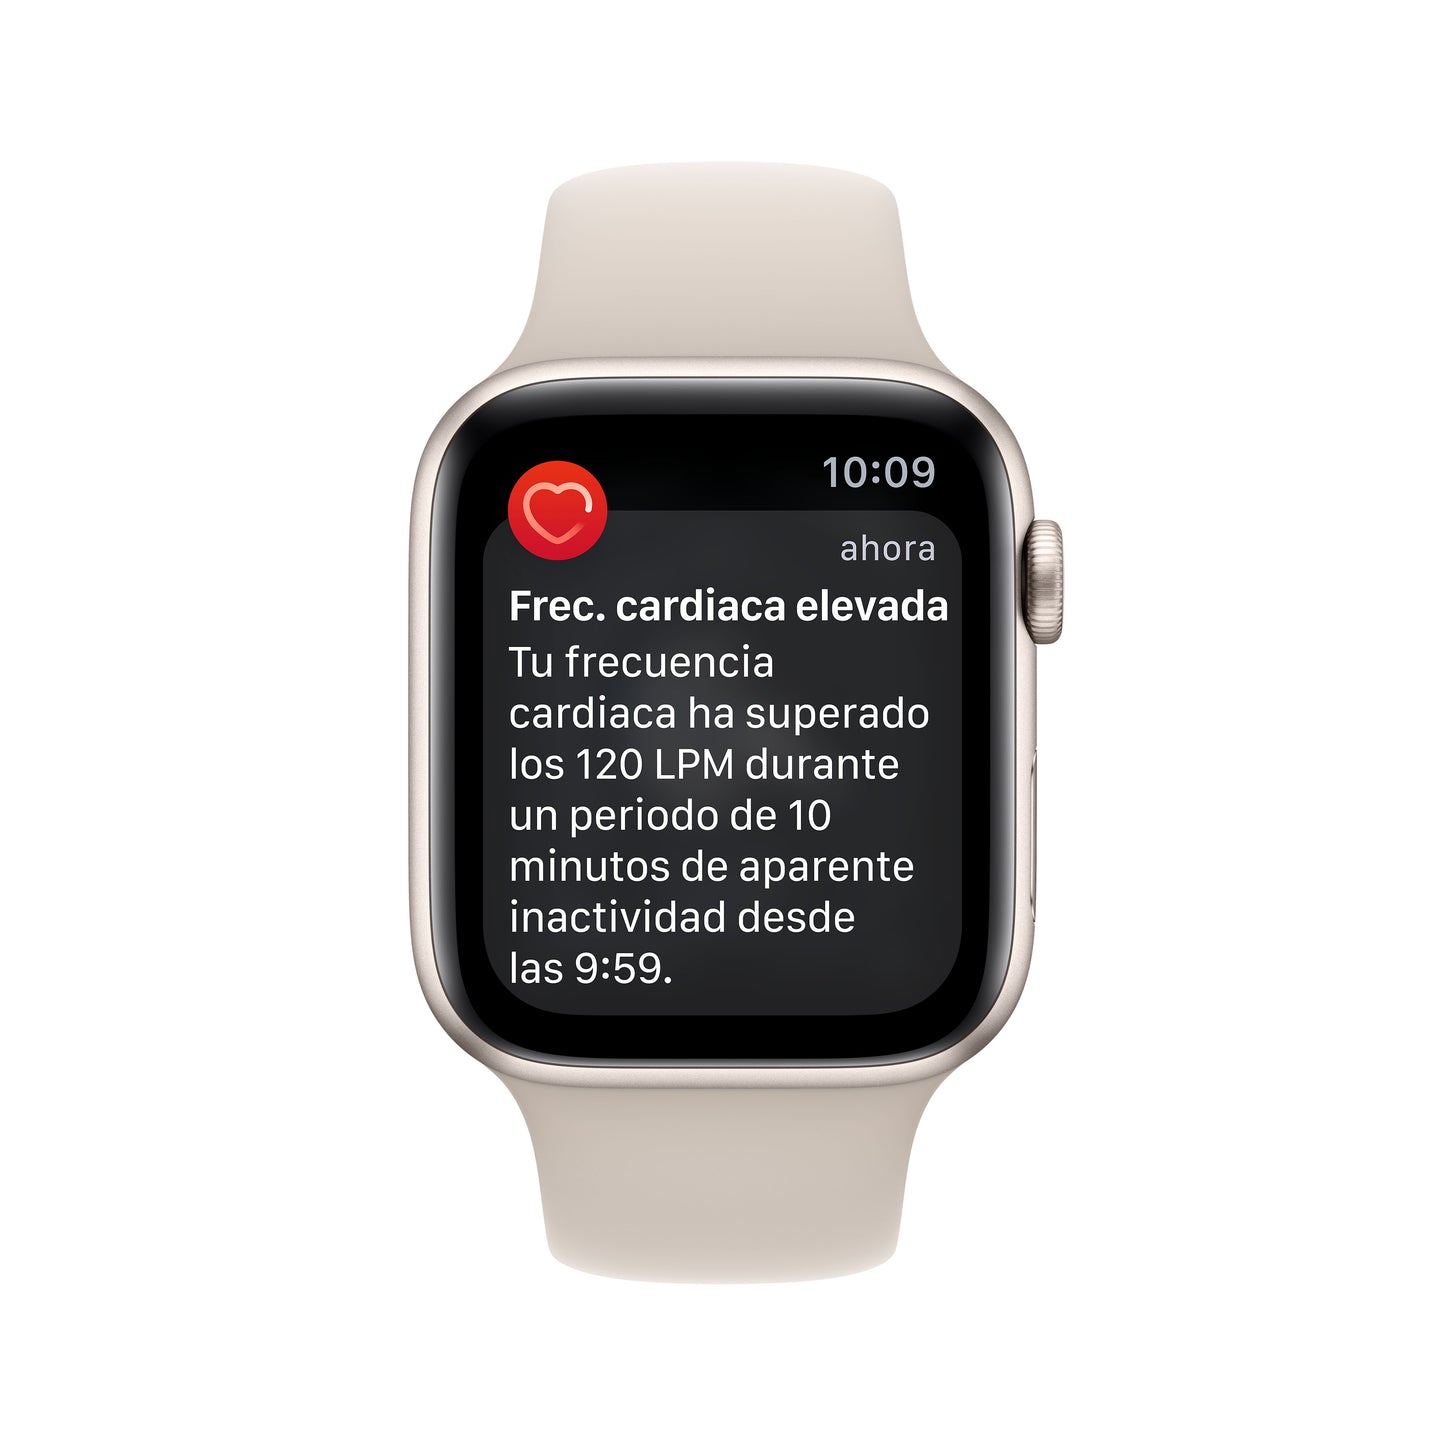 Apple Watch SE (GPS) mide tu frecuencia cardiaca en www.mac-center.com